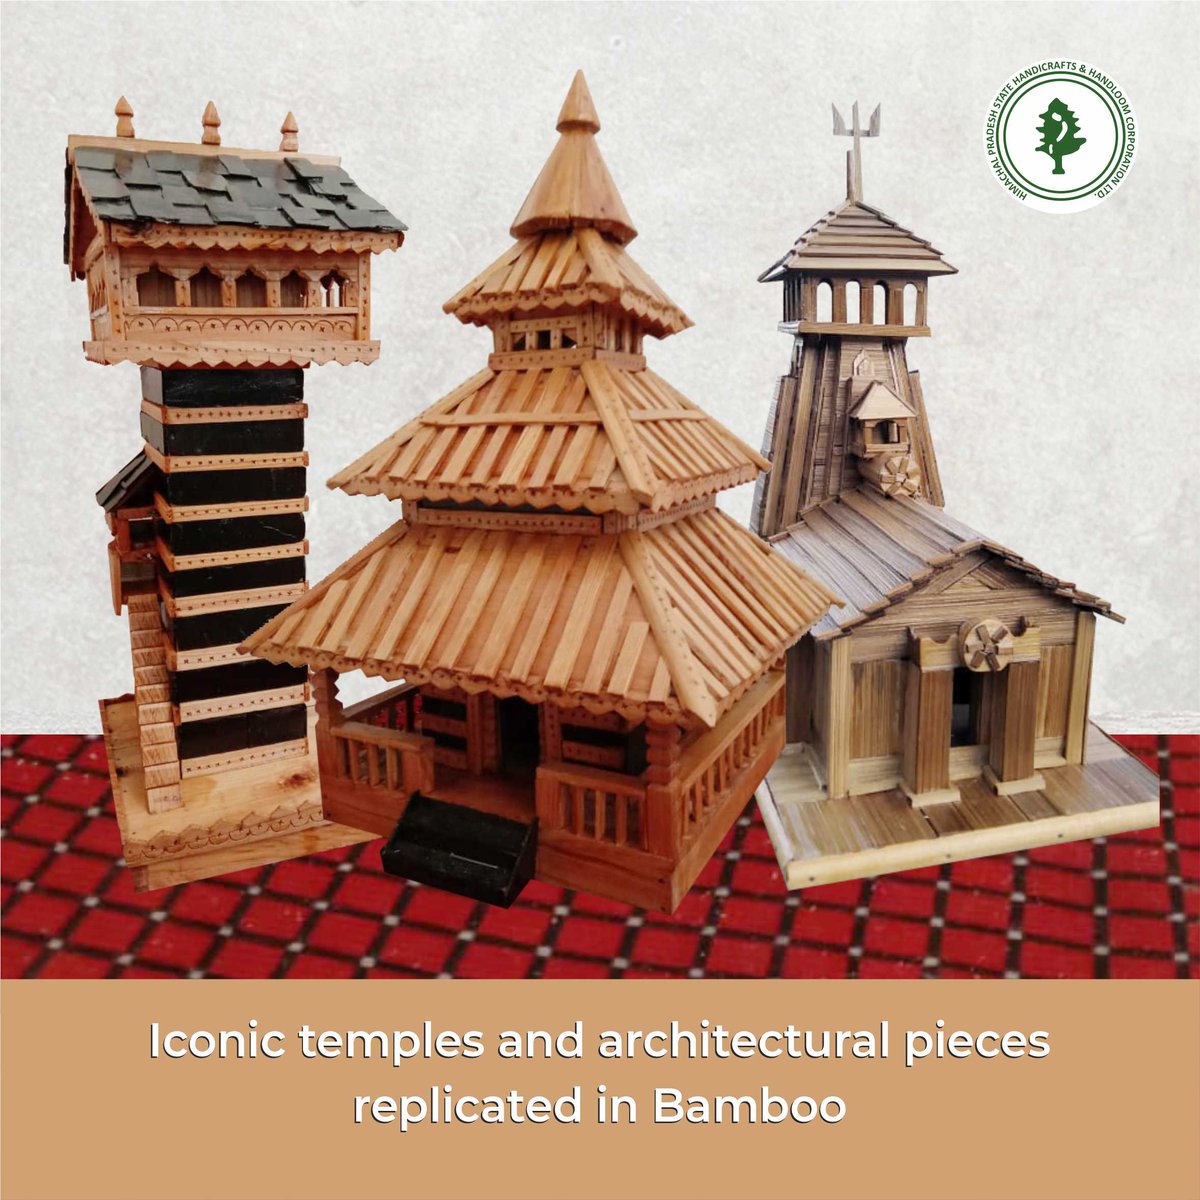 BAMBOO CRAFT: ARTISTRY WITH A PURPOSE!
#vocalforlocal
#myhandloommypride 
#HimachalBambooCraft #bambooproducts #Himachali #bamboocraft
#HimachalPradesh #Handicrafts #Handloom